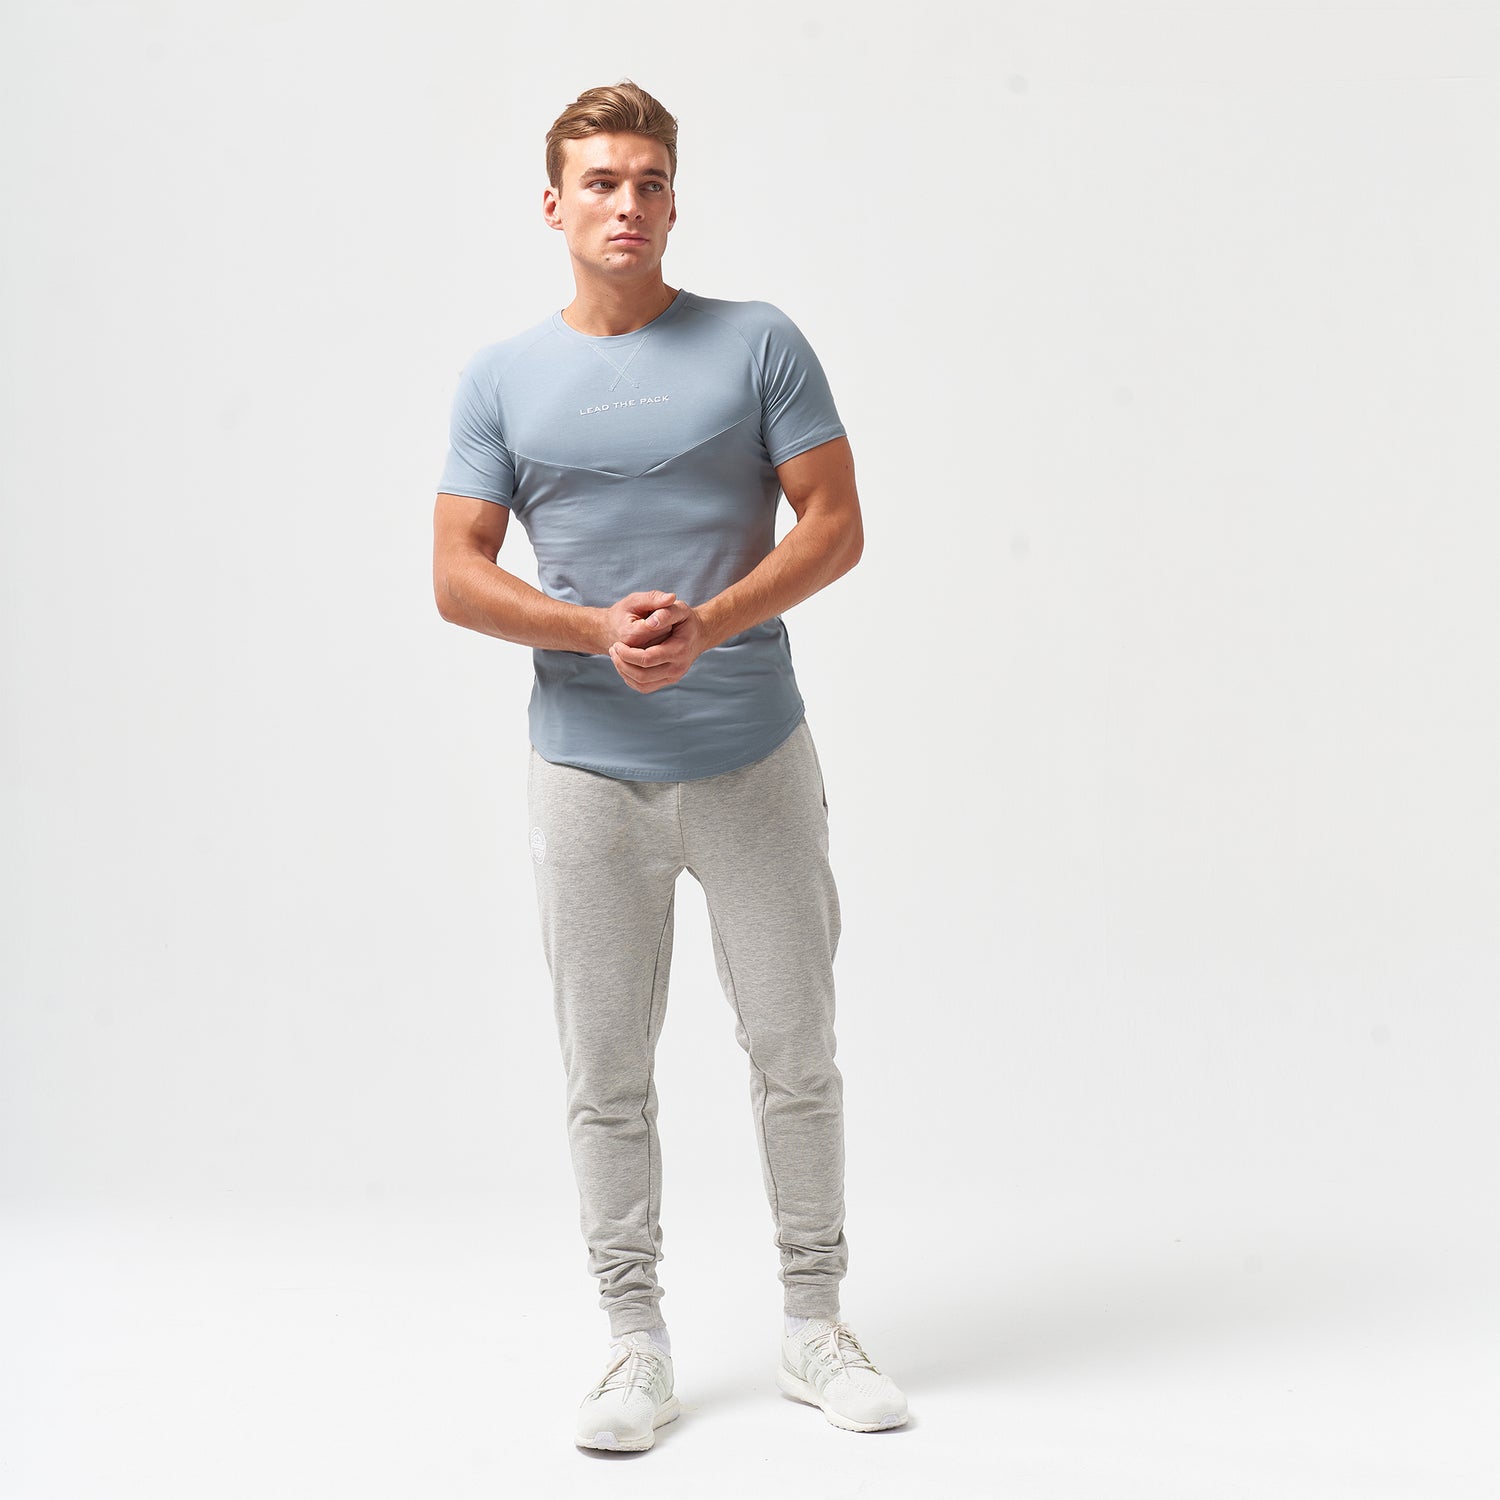 squatwolf-gym-wear-statement-tee-blue-workout-shirts-for-men